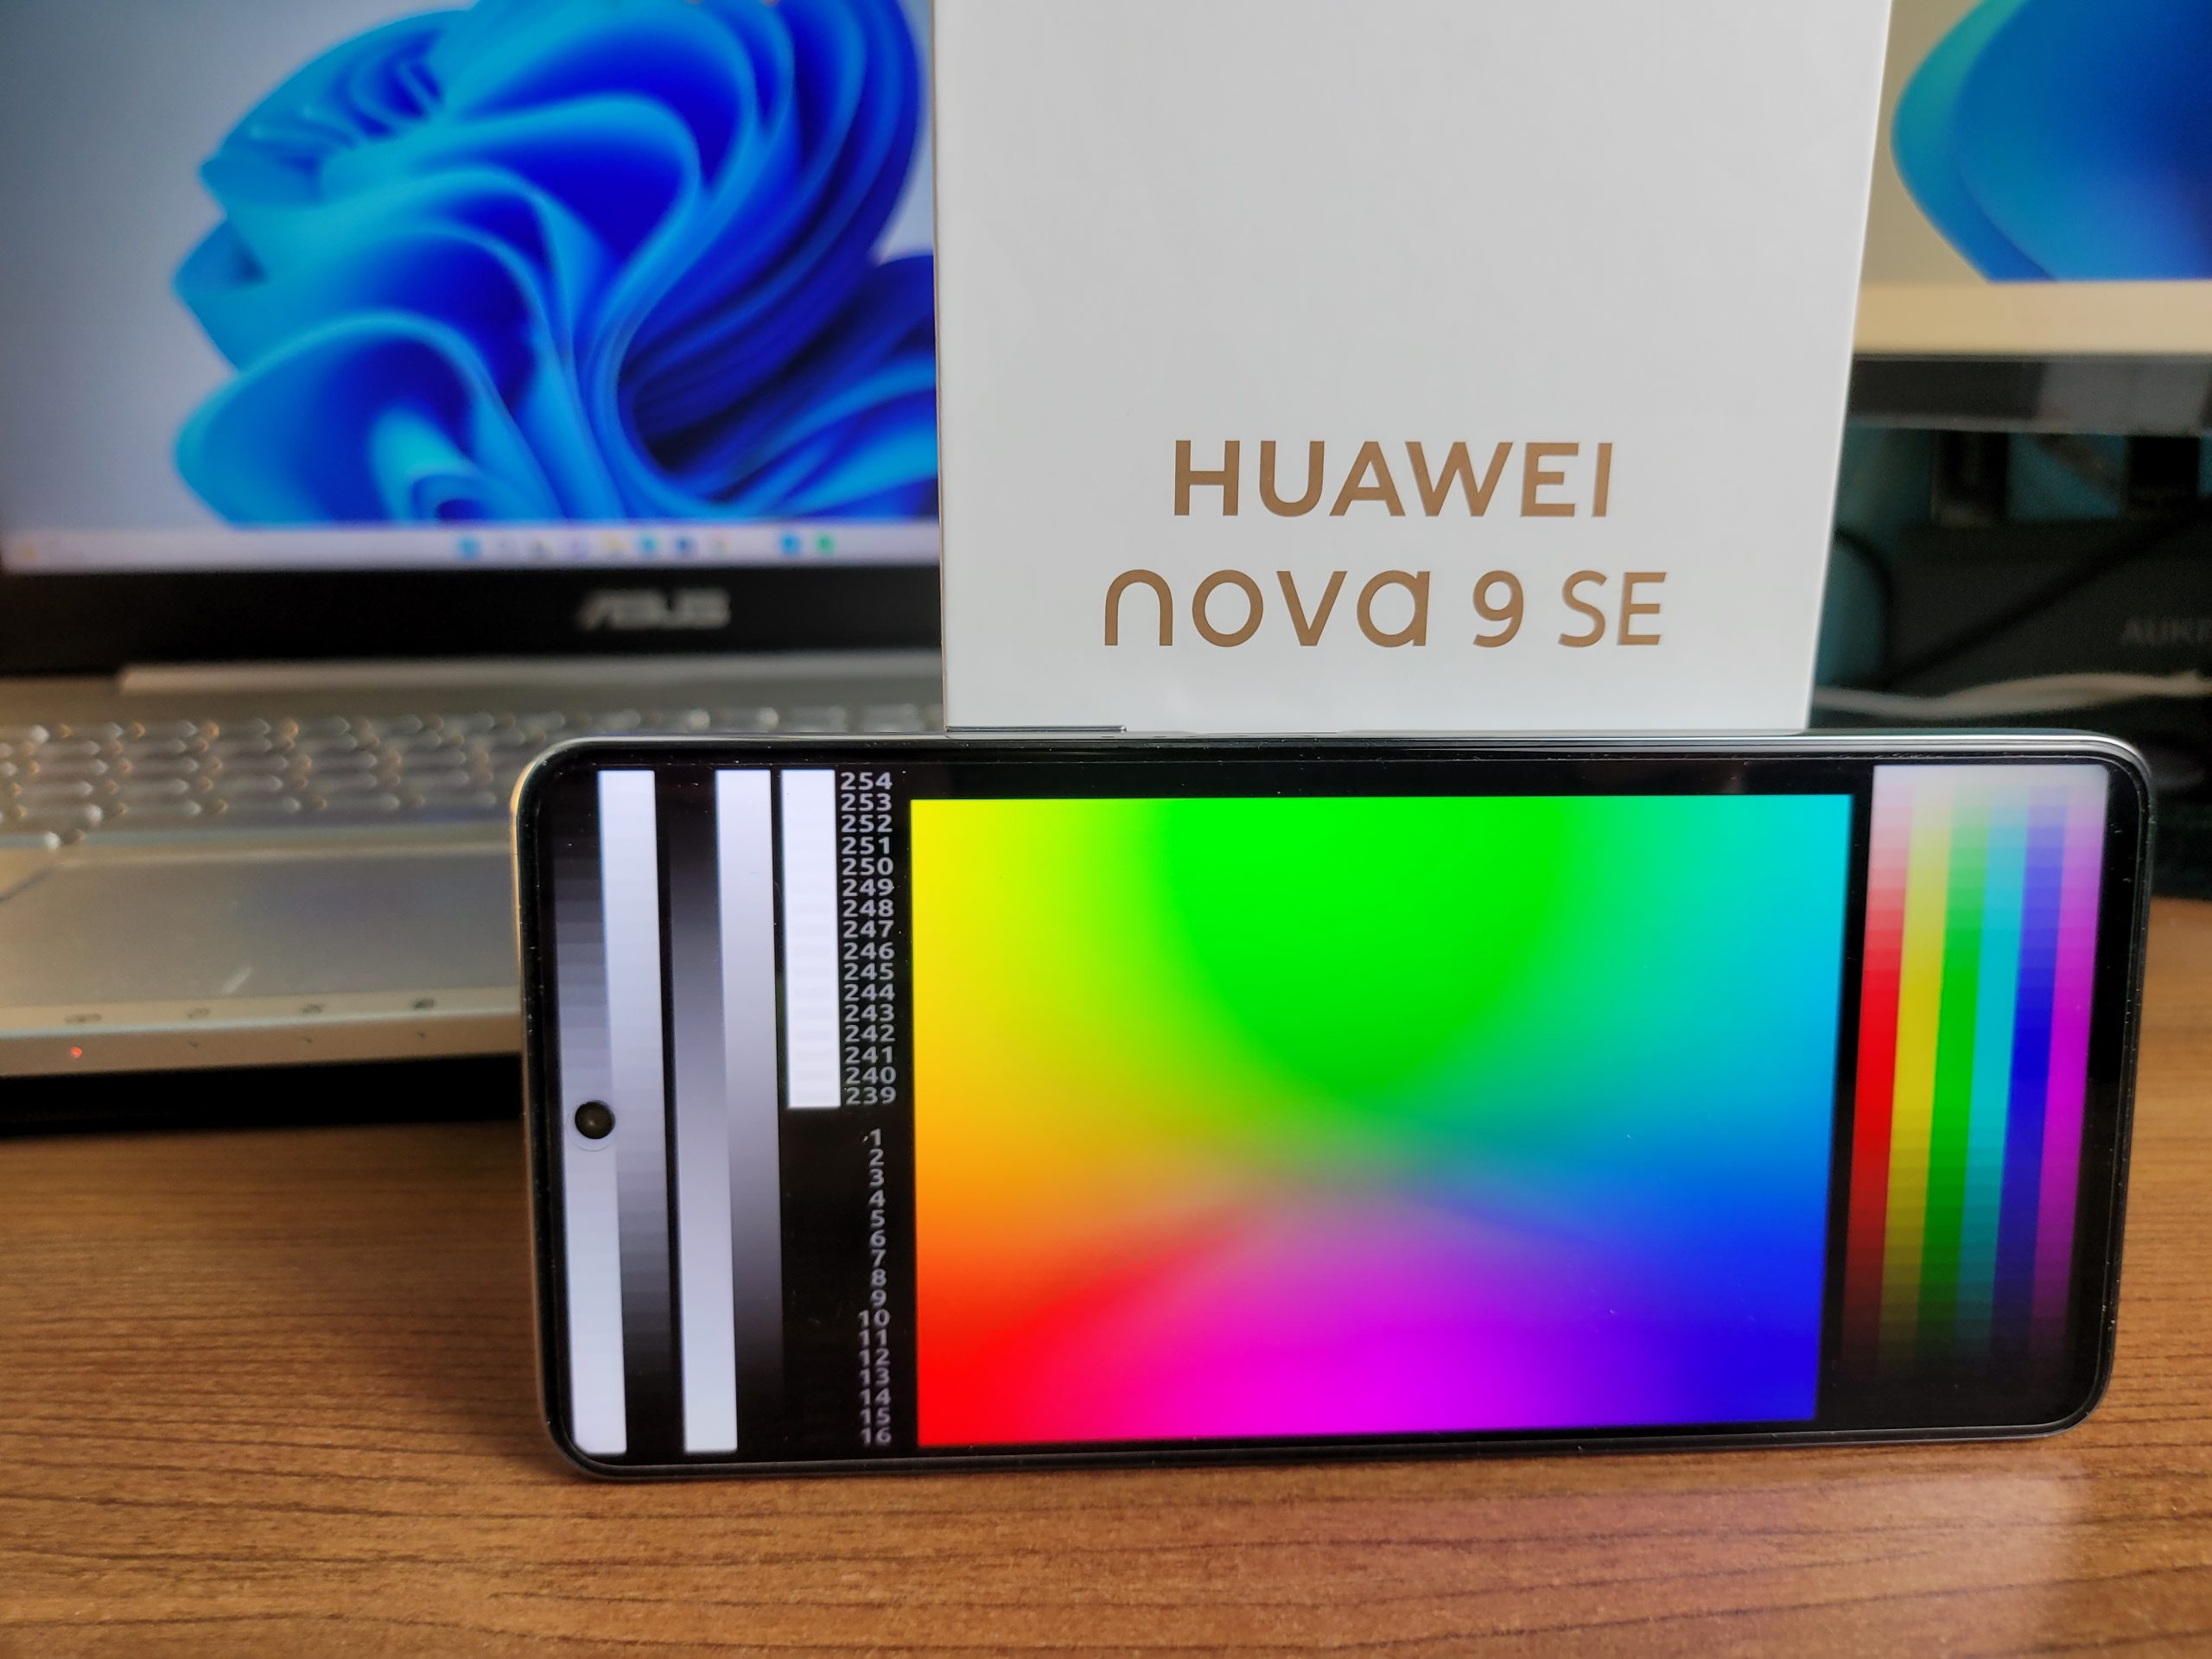 20220513 221033 scaled - Huawei Nova 9 SE recensione